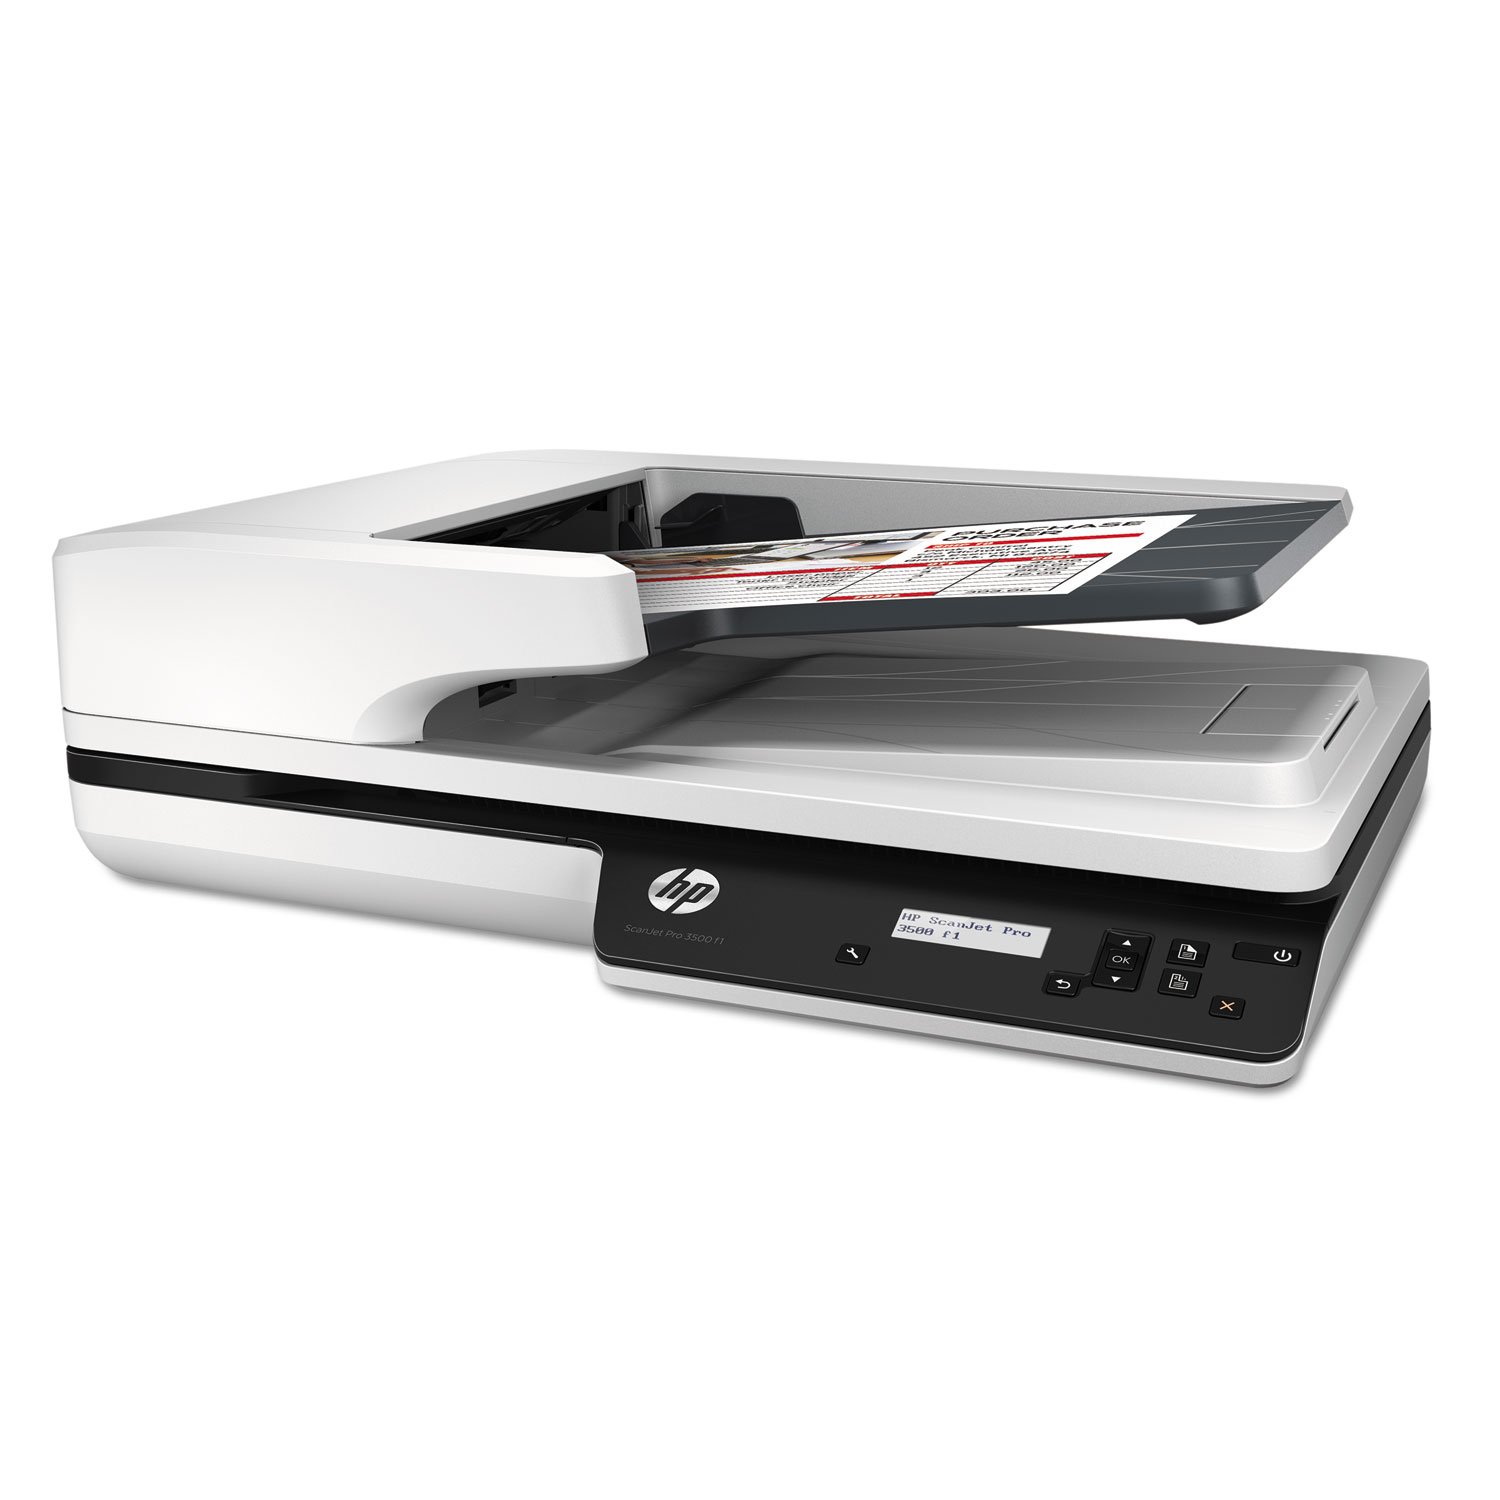  HP L2741A#BGJ Scanjet Pro 3500 f1 Flatbed Scanner, 600 dpi Optical Resolution, 50-Sheet Duplex Auto Document Feeder (HEWL2741A) 